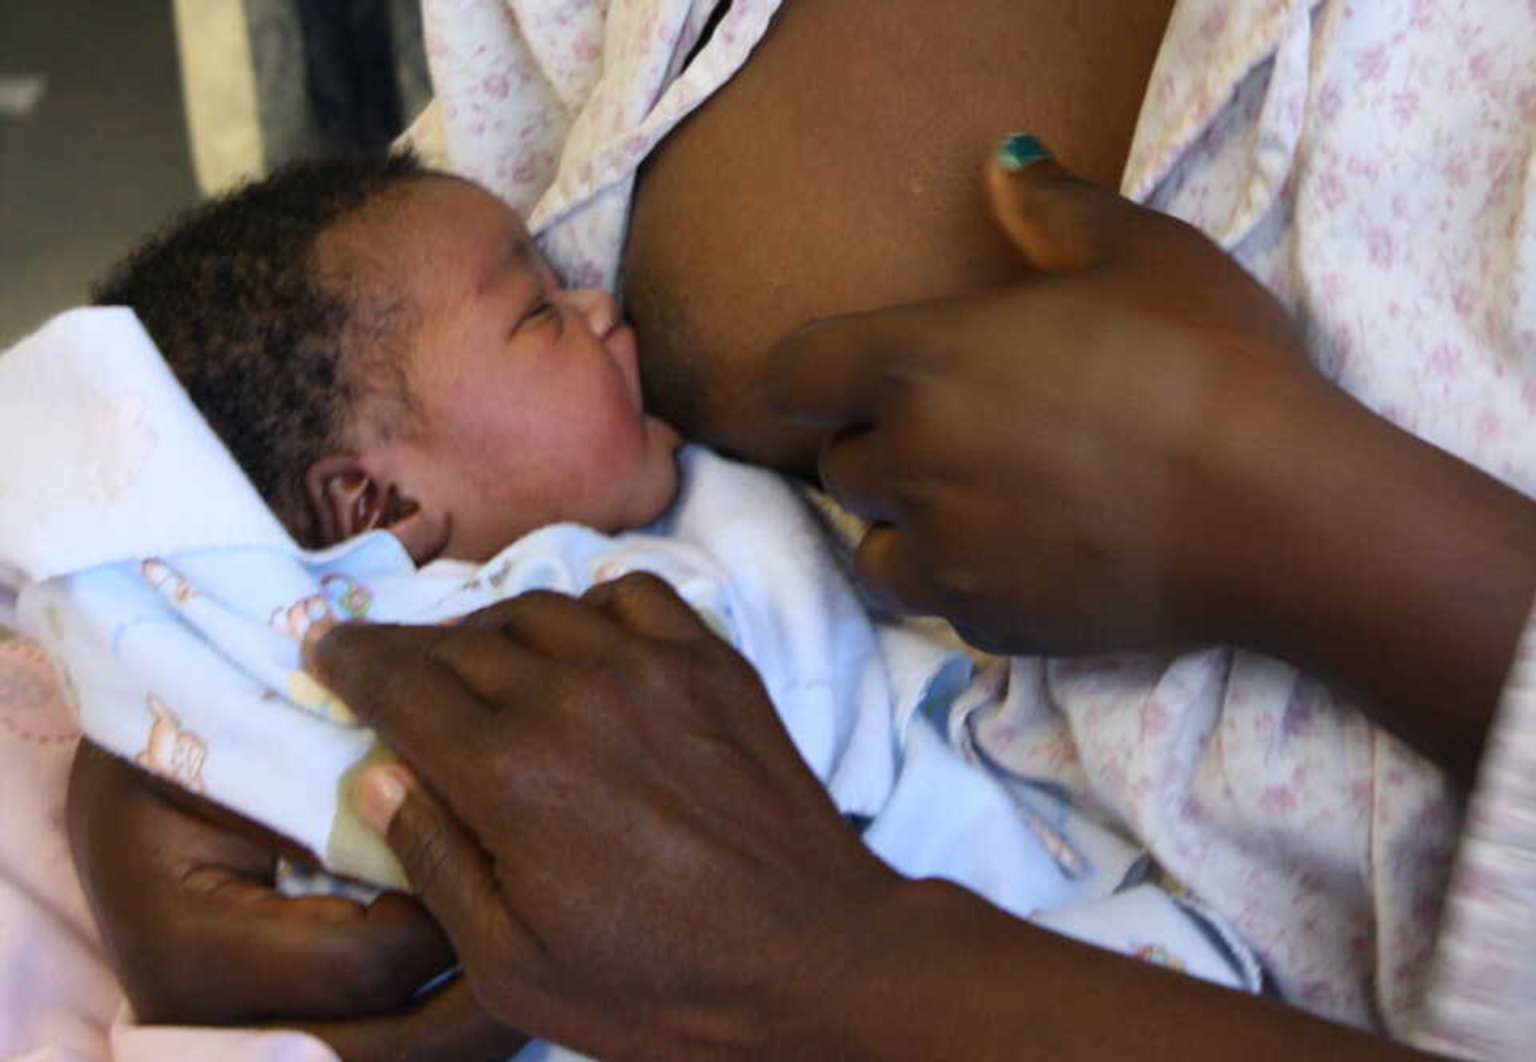 Importance of breastfeeding